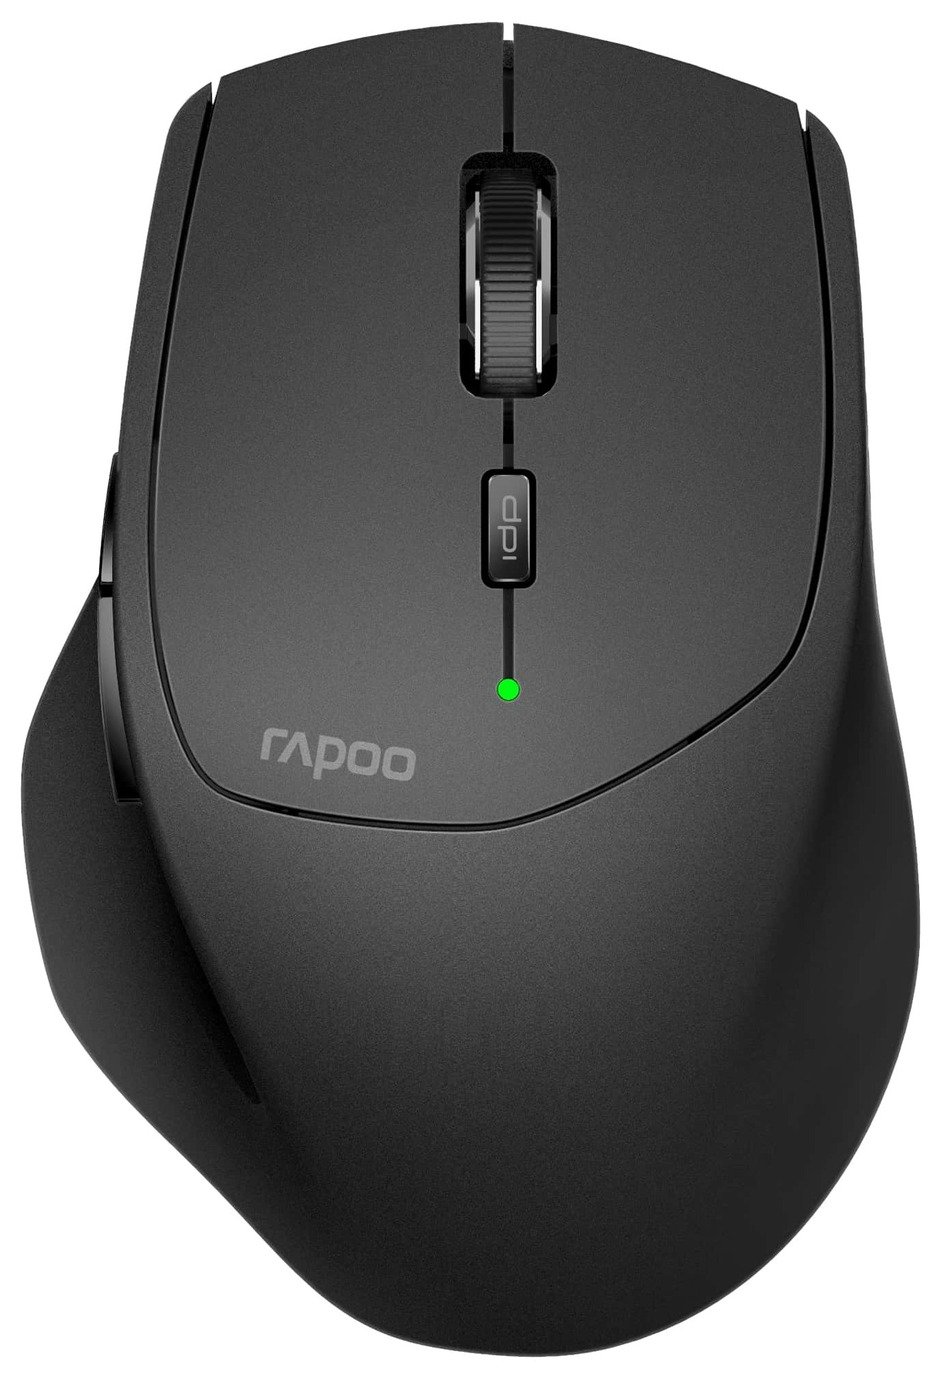 Rapoo MT550 Multi-Mode Optical Wireless Mouse - Black Reviews